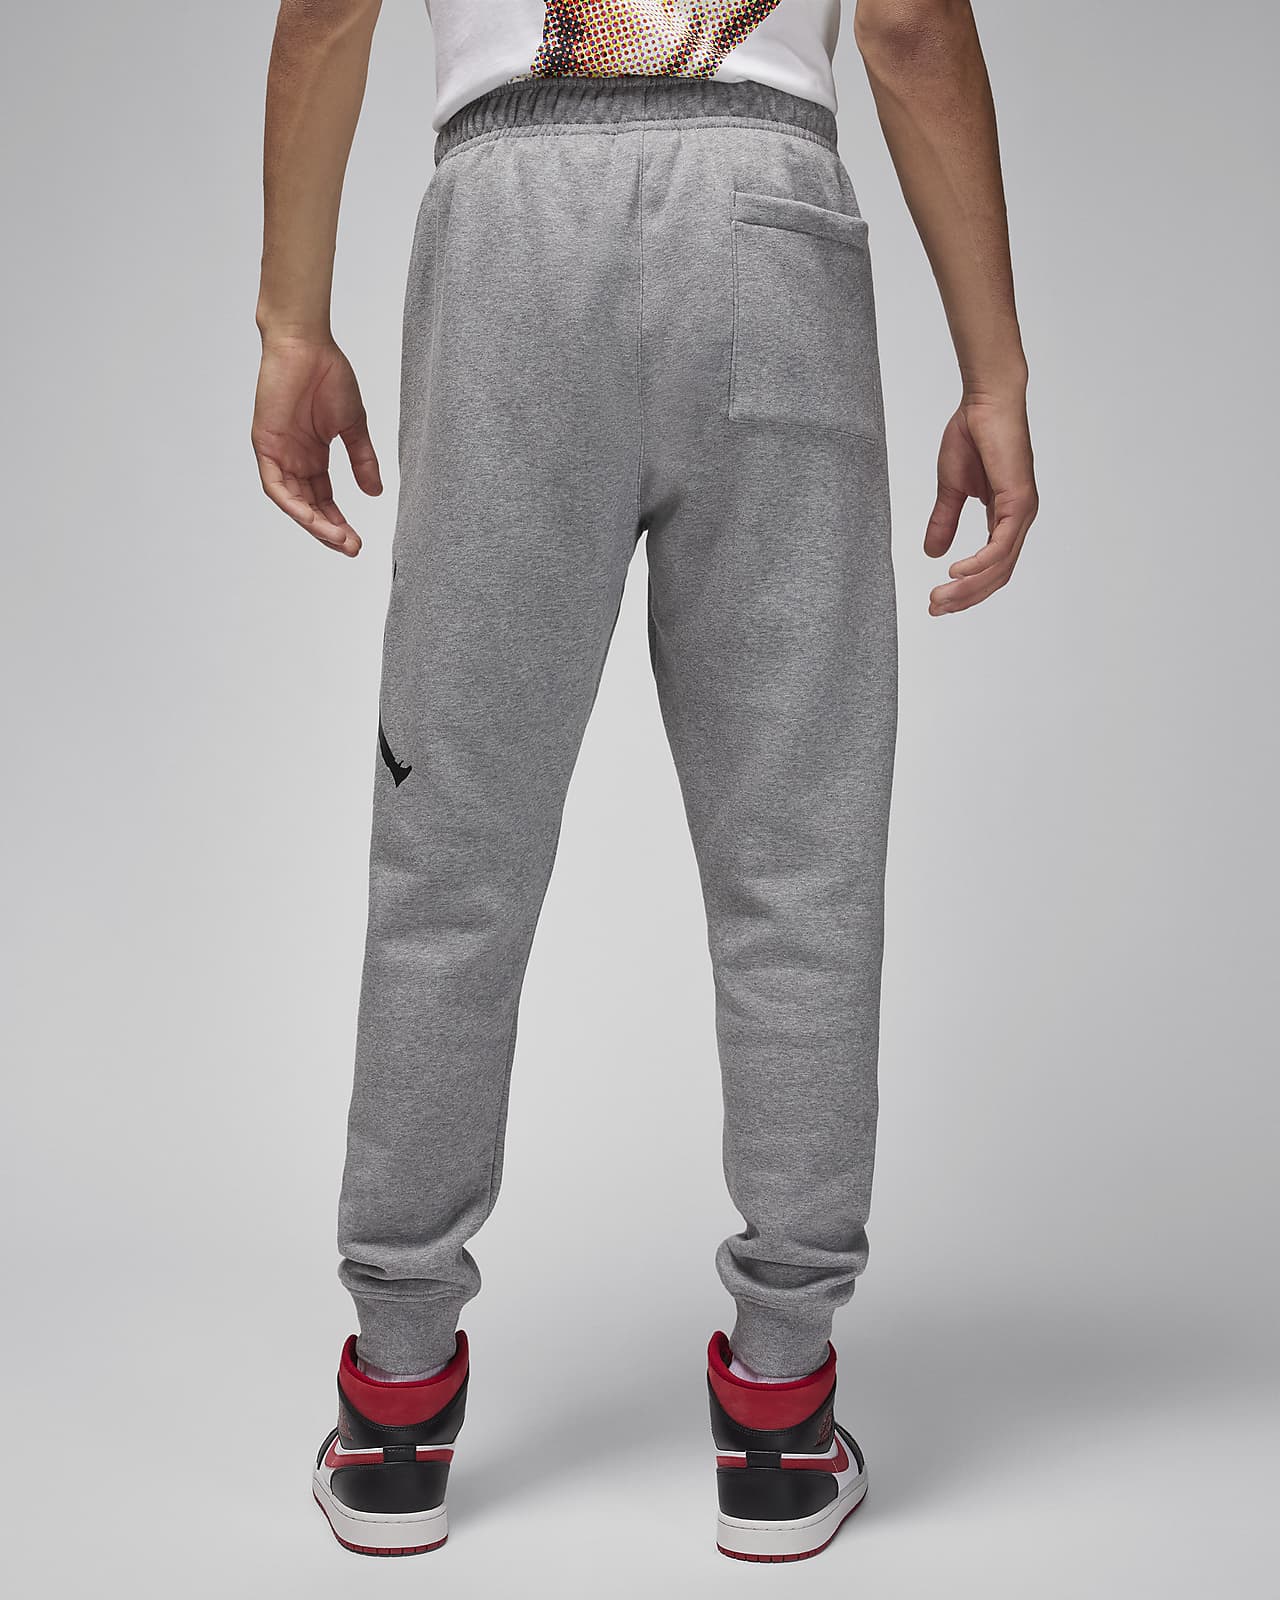 Nike Air Jordan Joggers Sweat Pants Youth Sizes S, M, L, XL : NWT